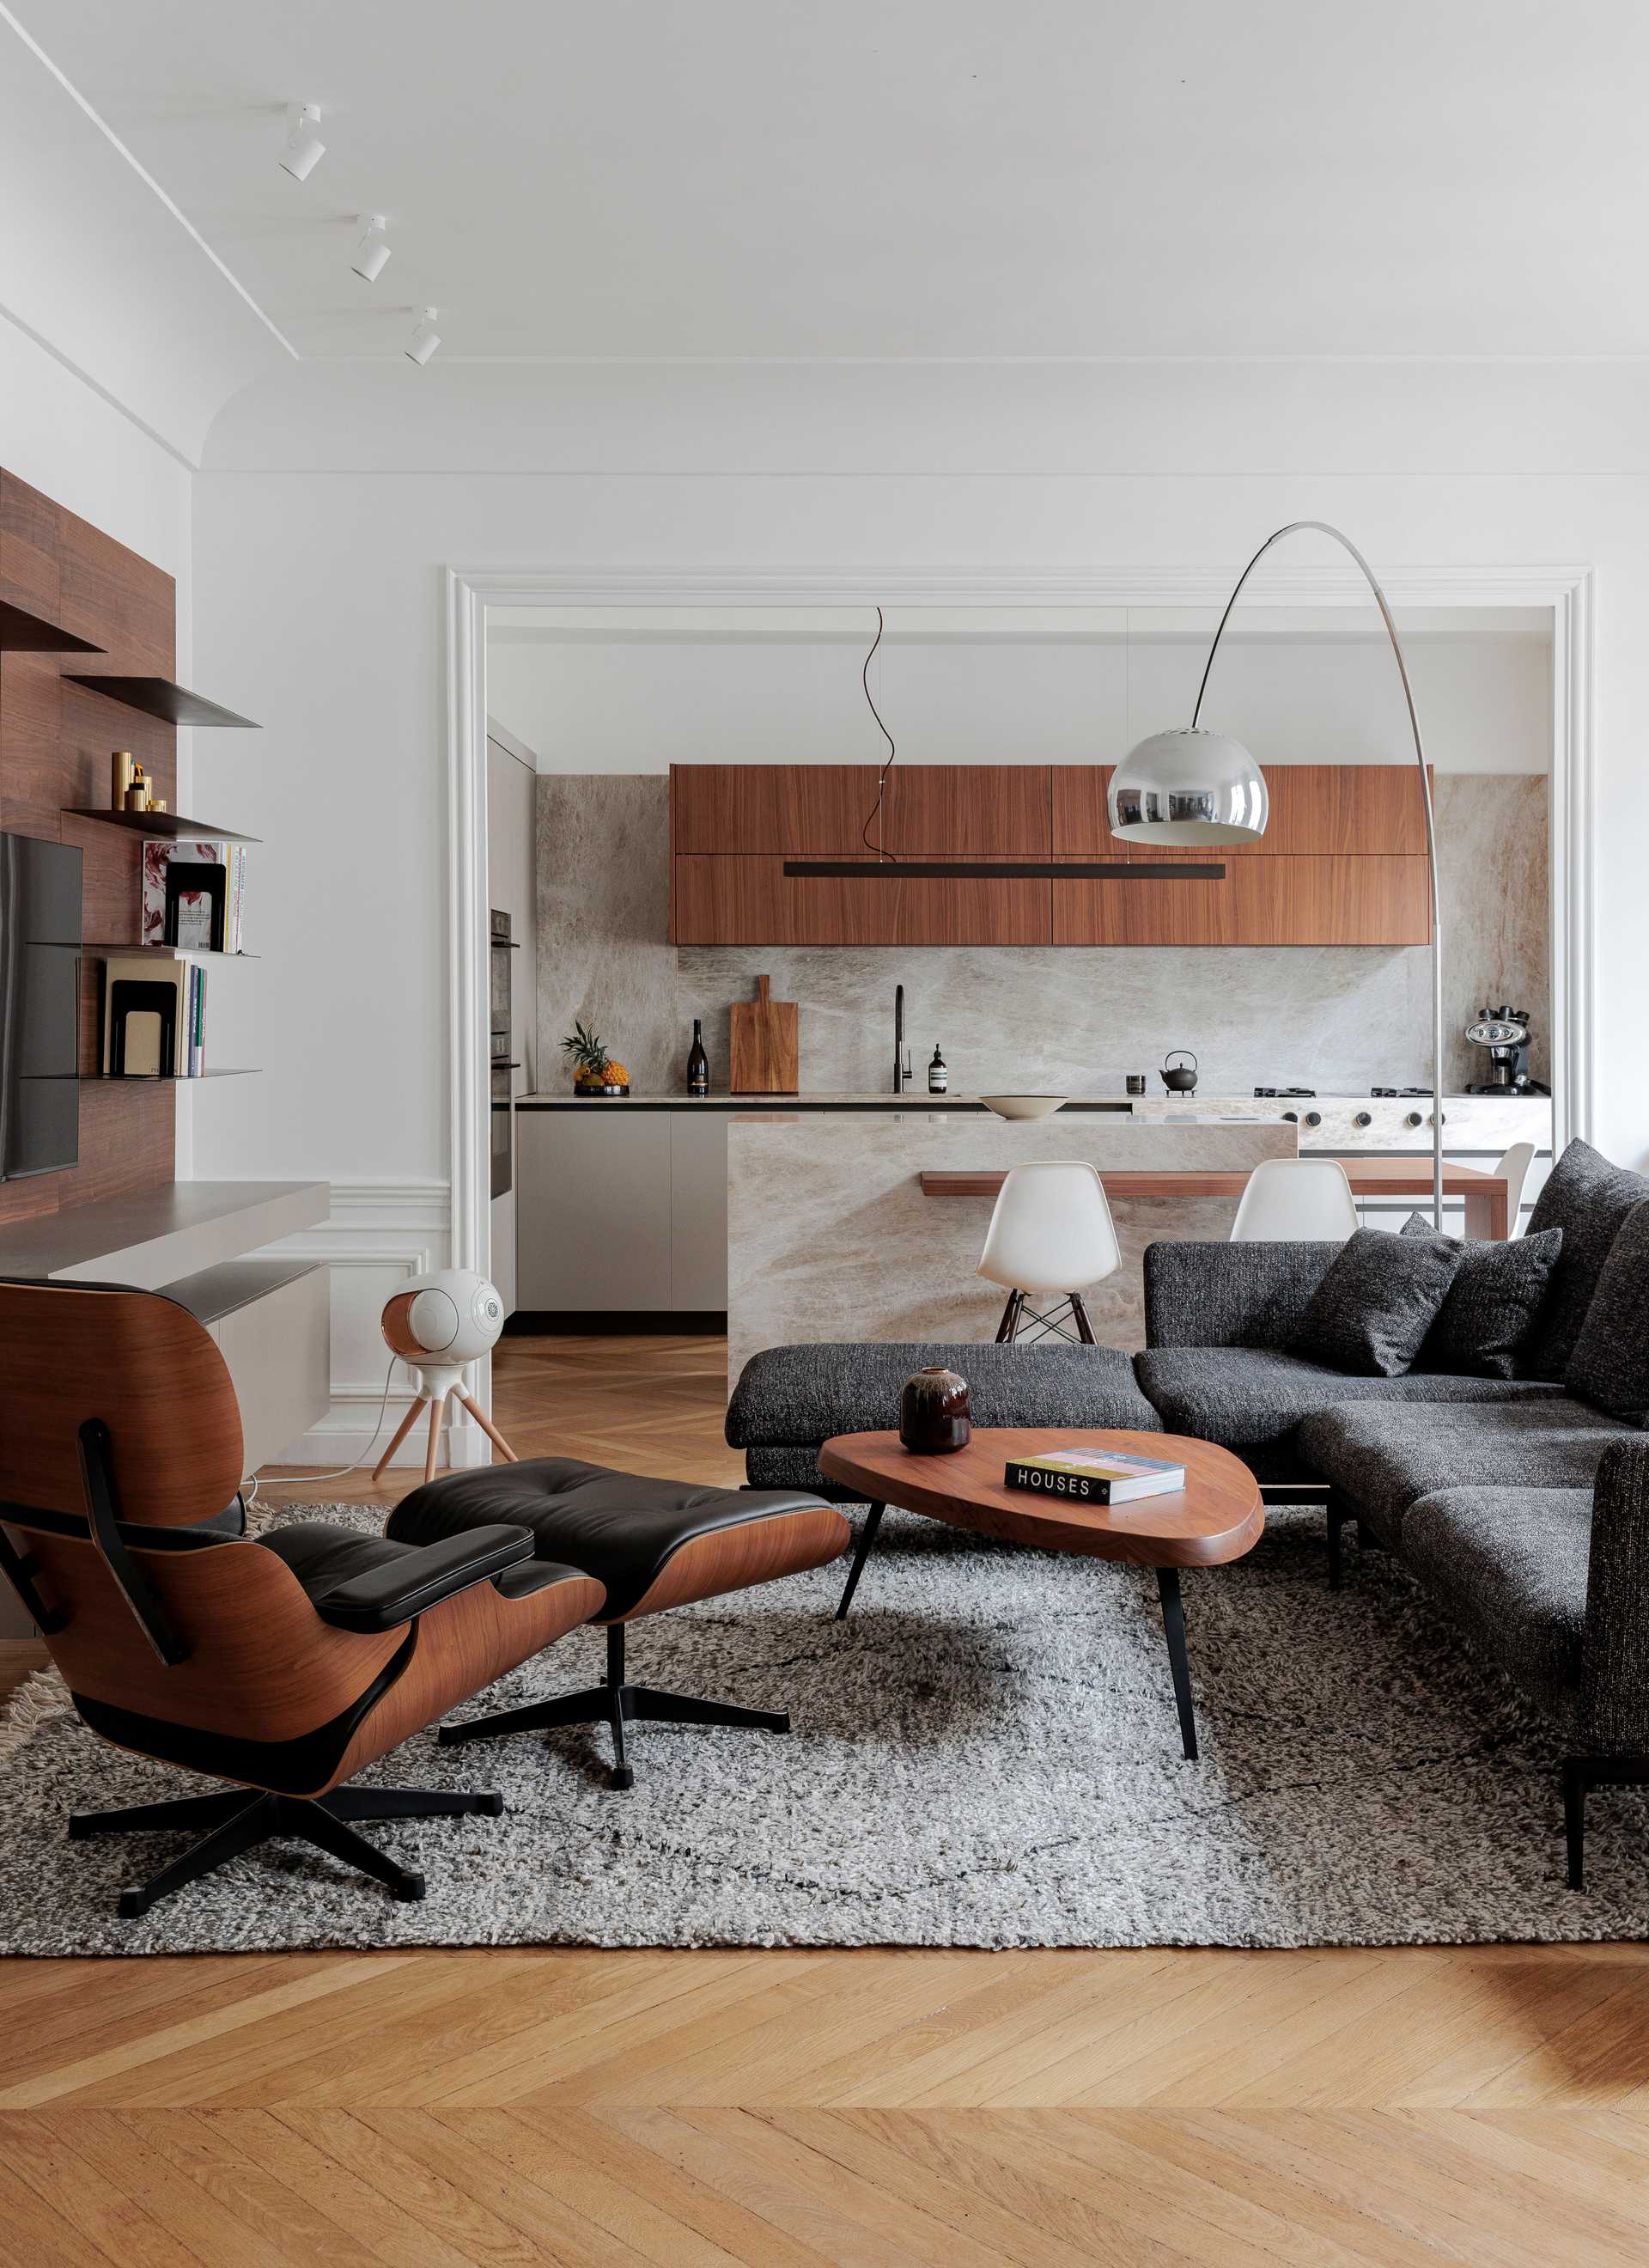 Design of a Haussmann apartment by an interior designer based in Paris